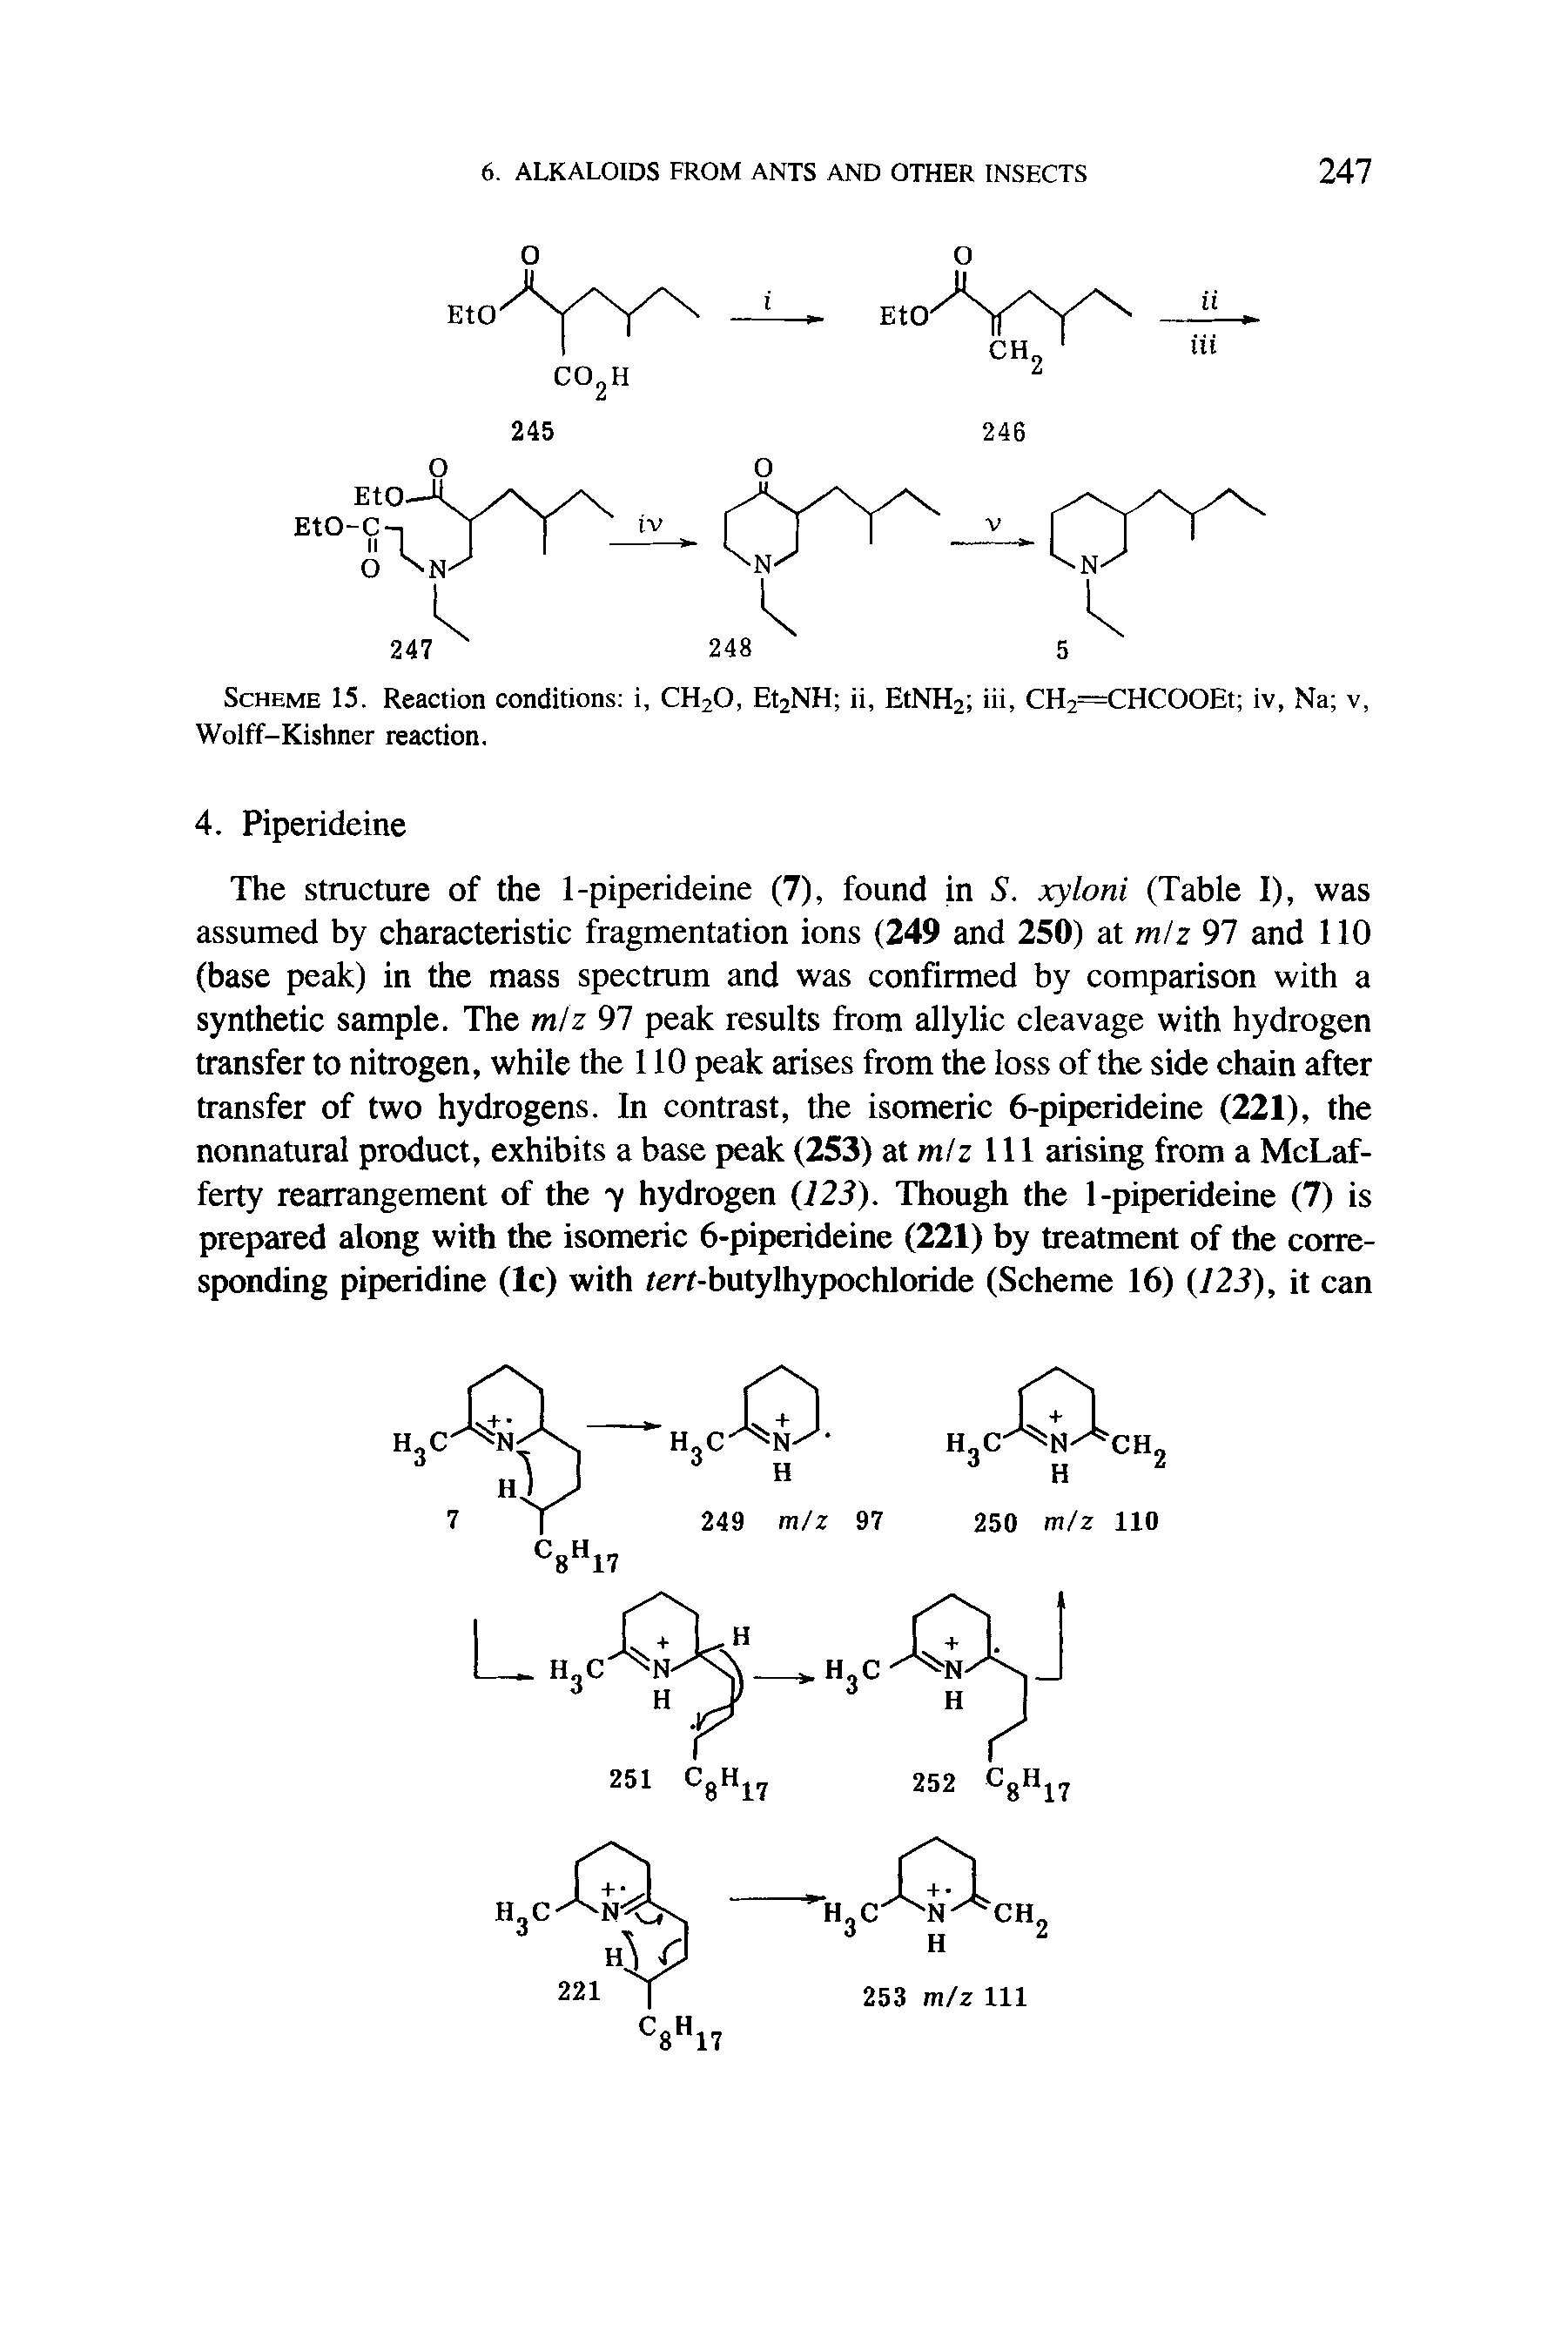 Scheme 15. Reaction conditions i, CH2O, Et2NH ii, EtNH2 iii, CH2=CHCOOEt iv, Na v, Wolff-Kishner reaction.